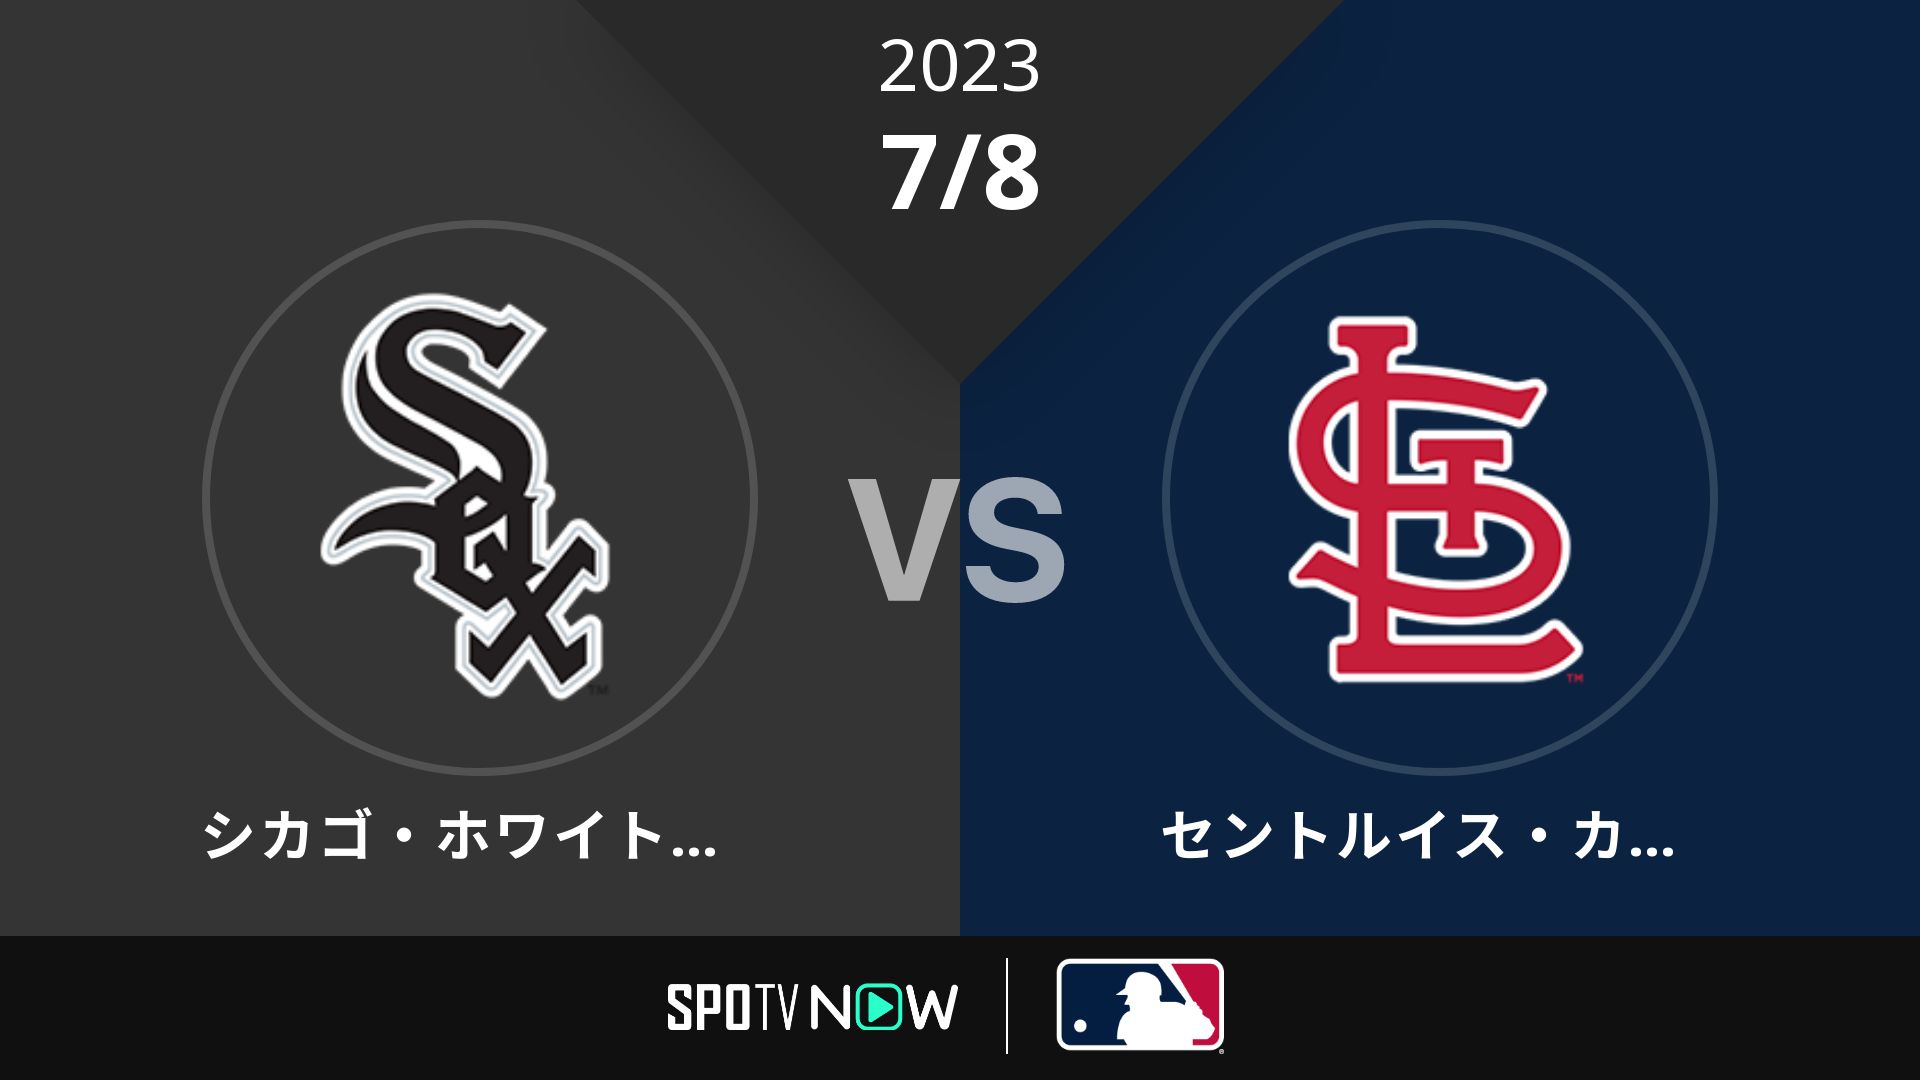 2023/7/8 Wソックス vs カージナルス [MLB]